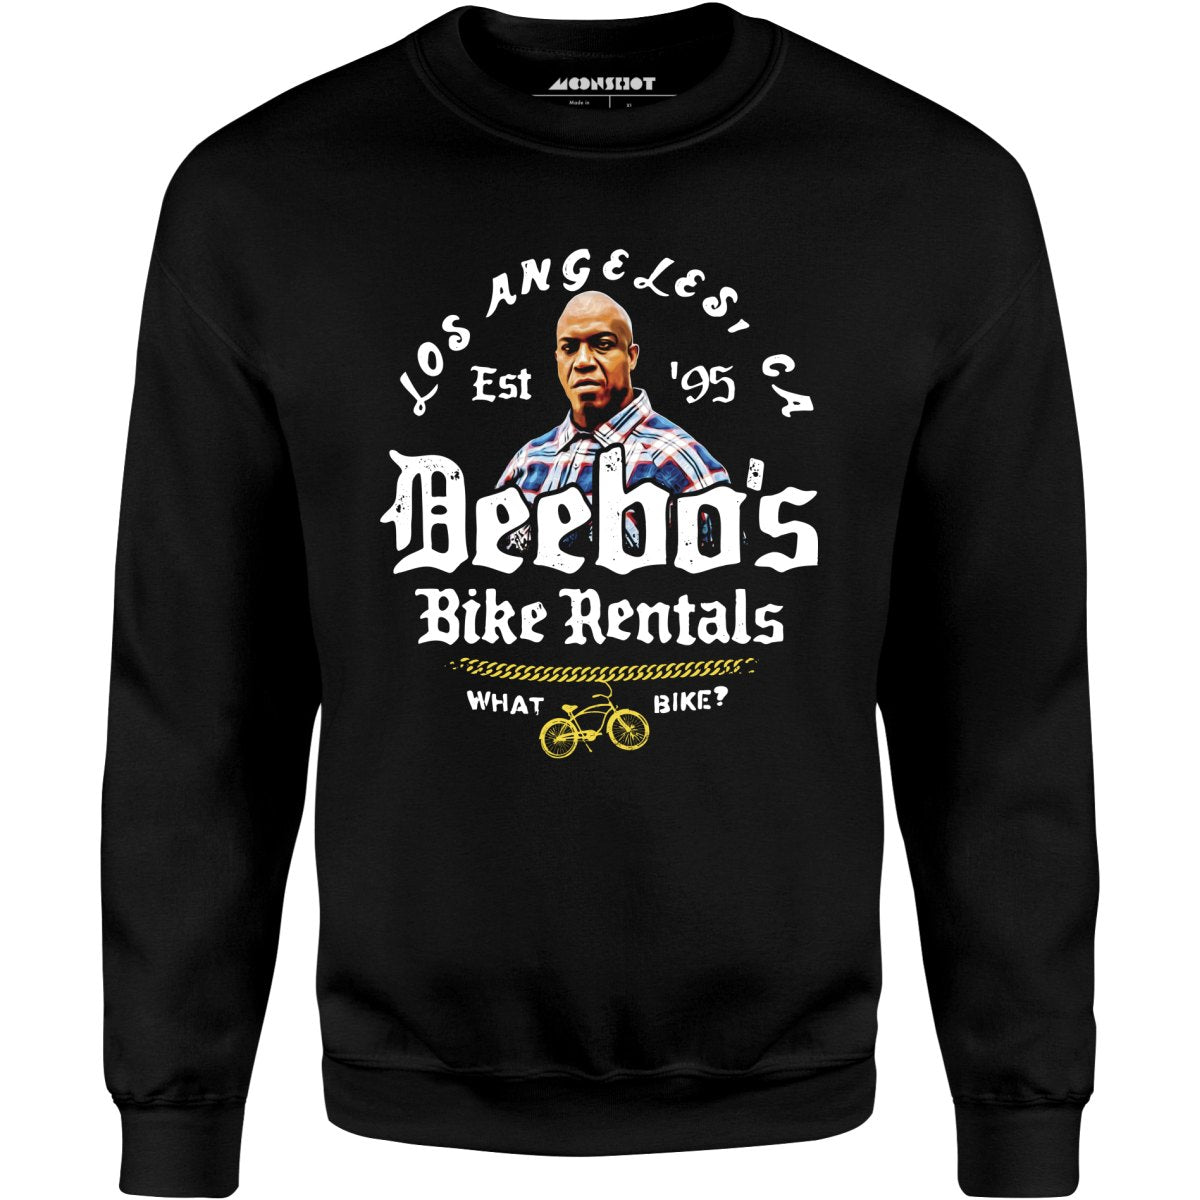 Deebo's Bike Rentals - What Bike? - Unisex Sweatshirt